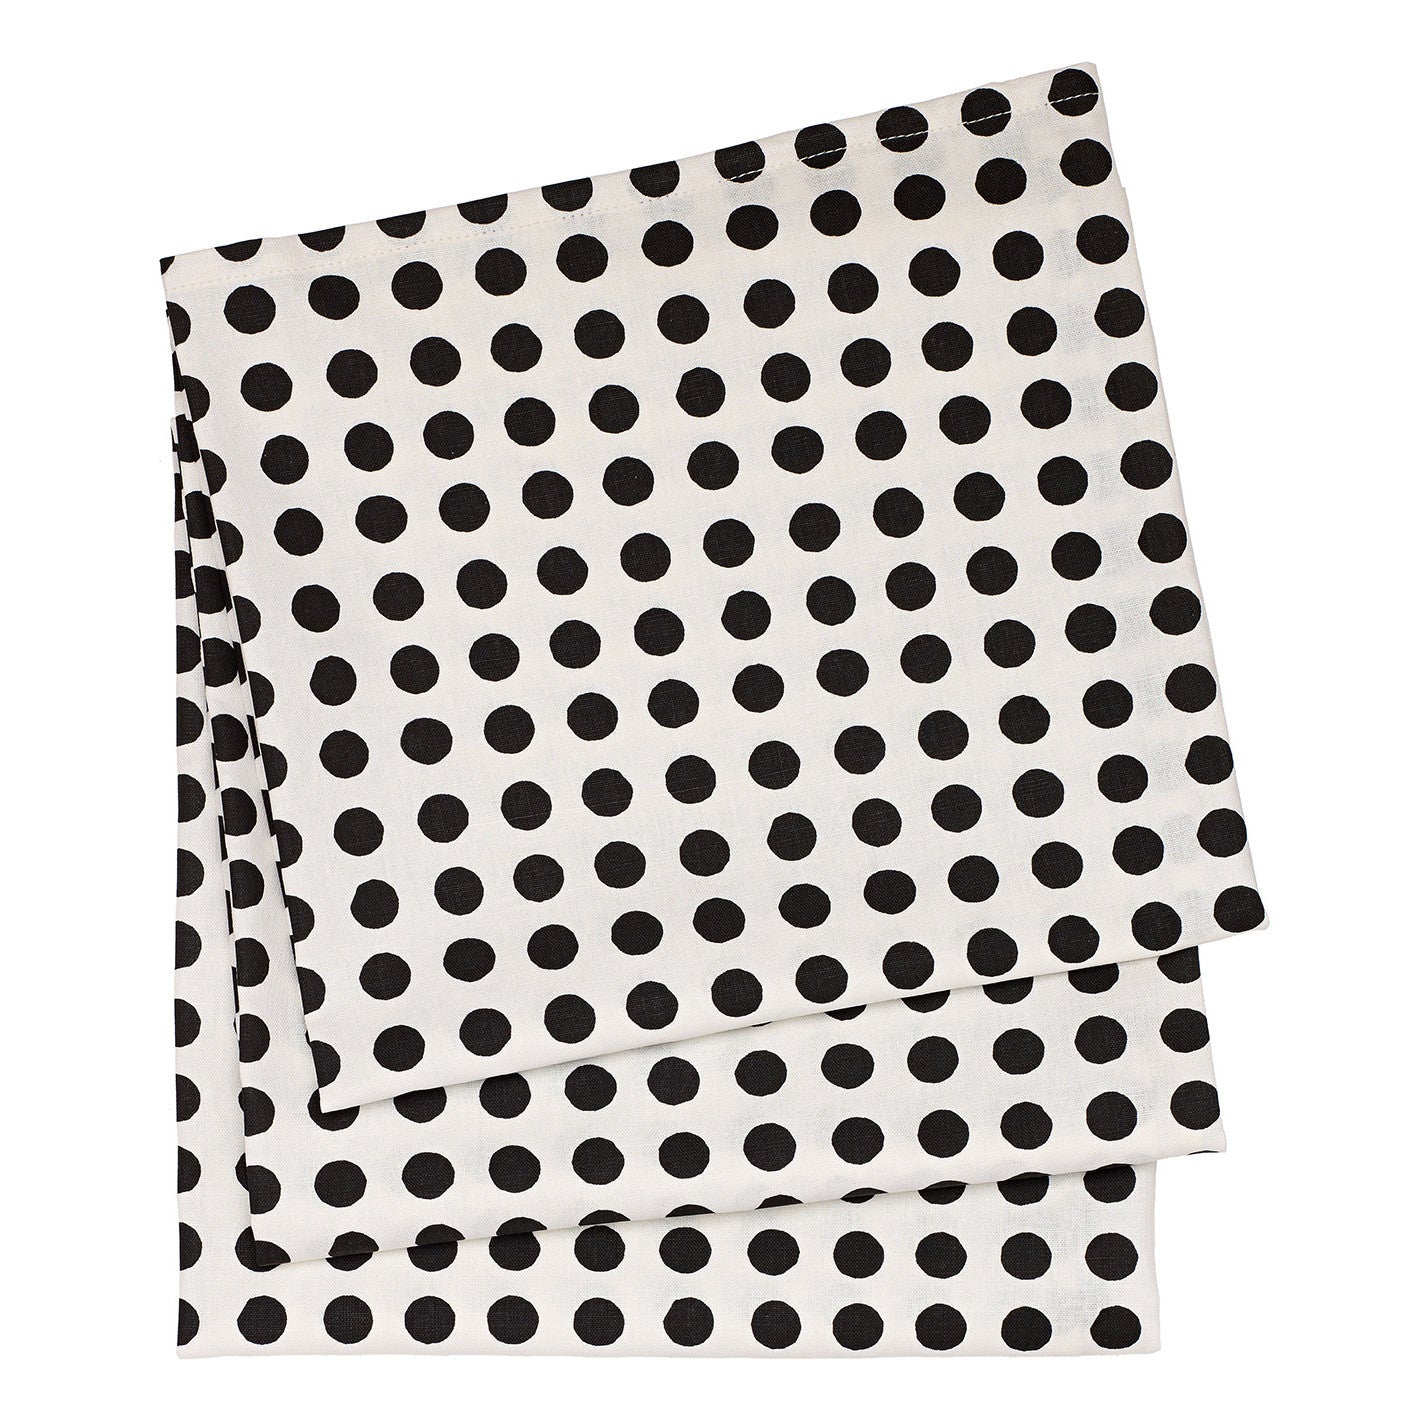 London Polka Dot Cotton Linen Tablecloth in Black